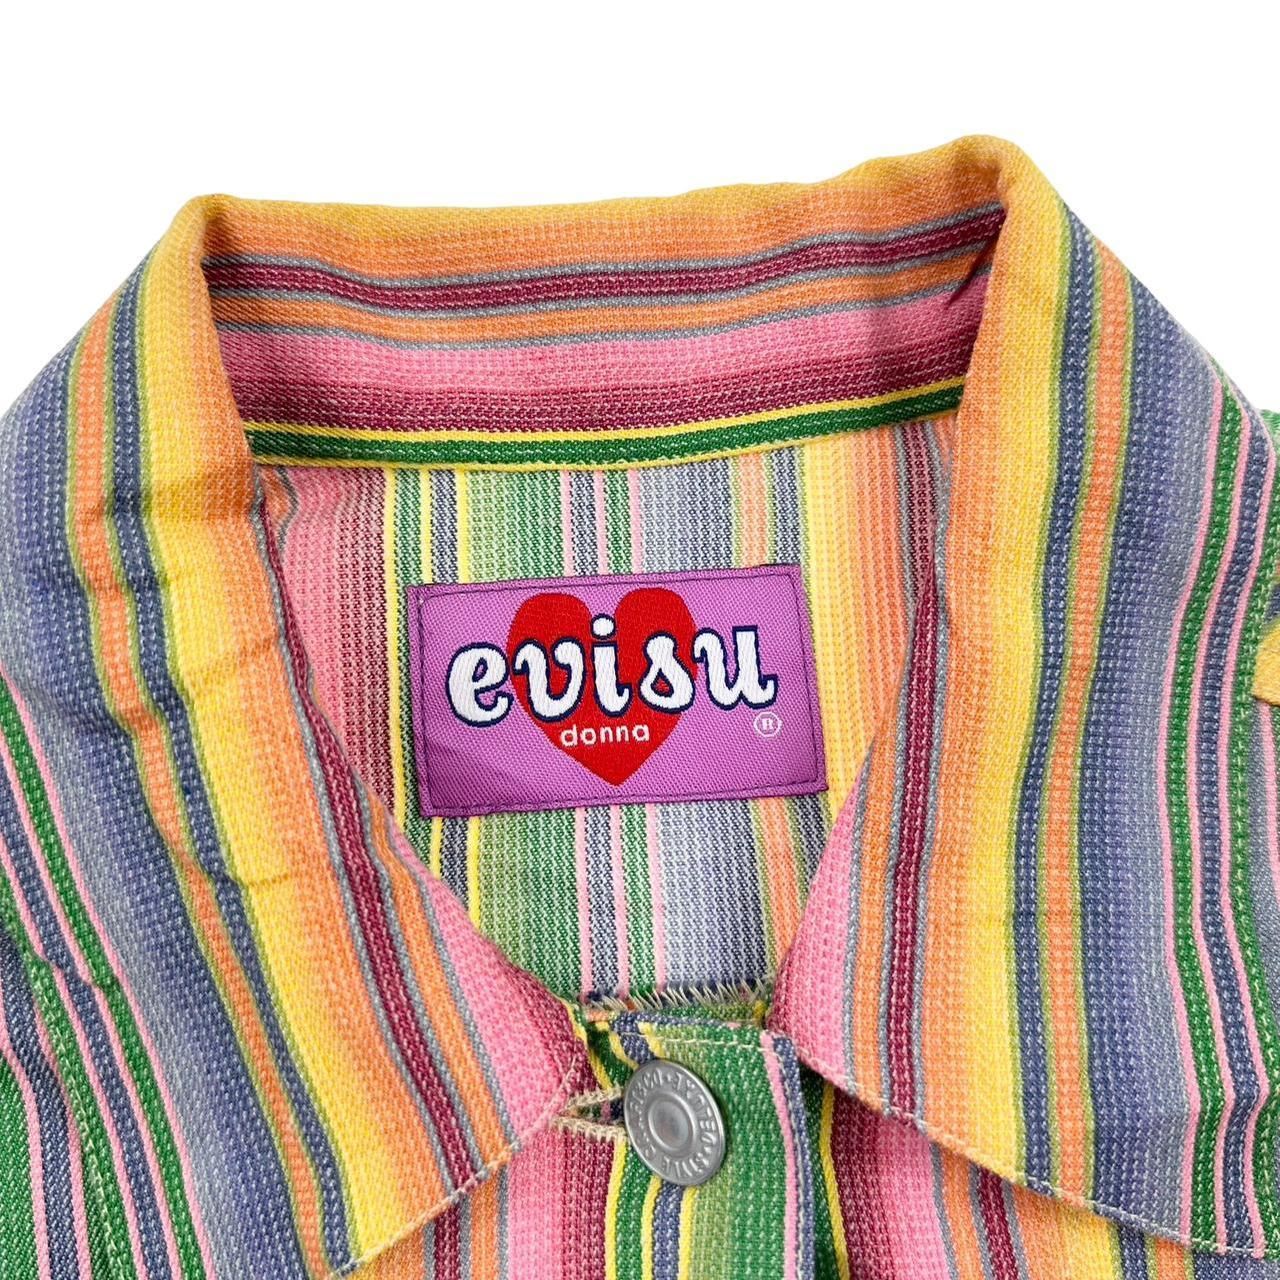 Vintage Evisu striped jacket woman’s size S - Known Source